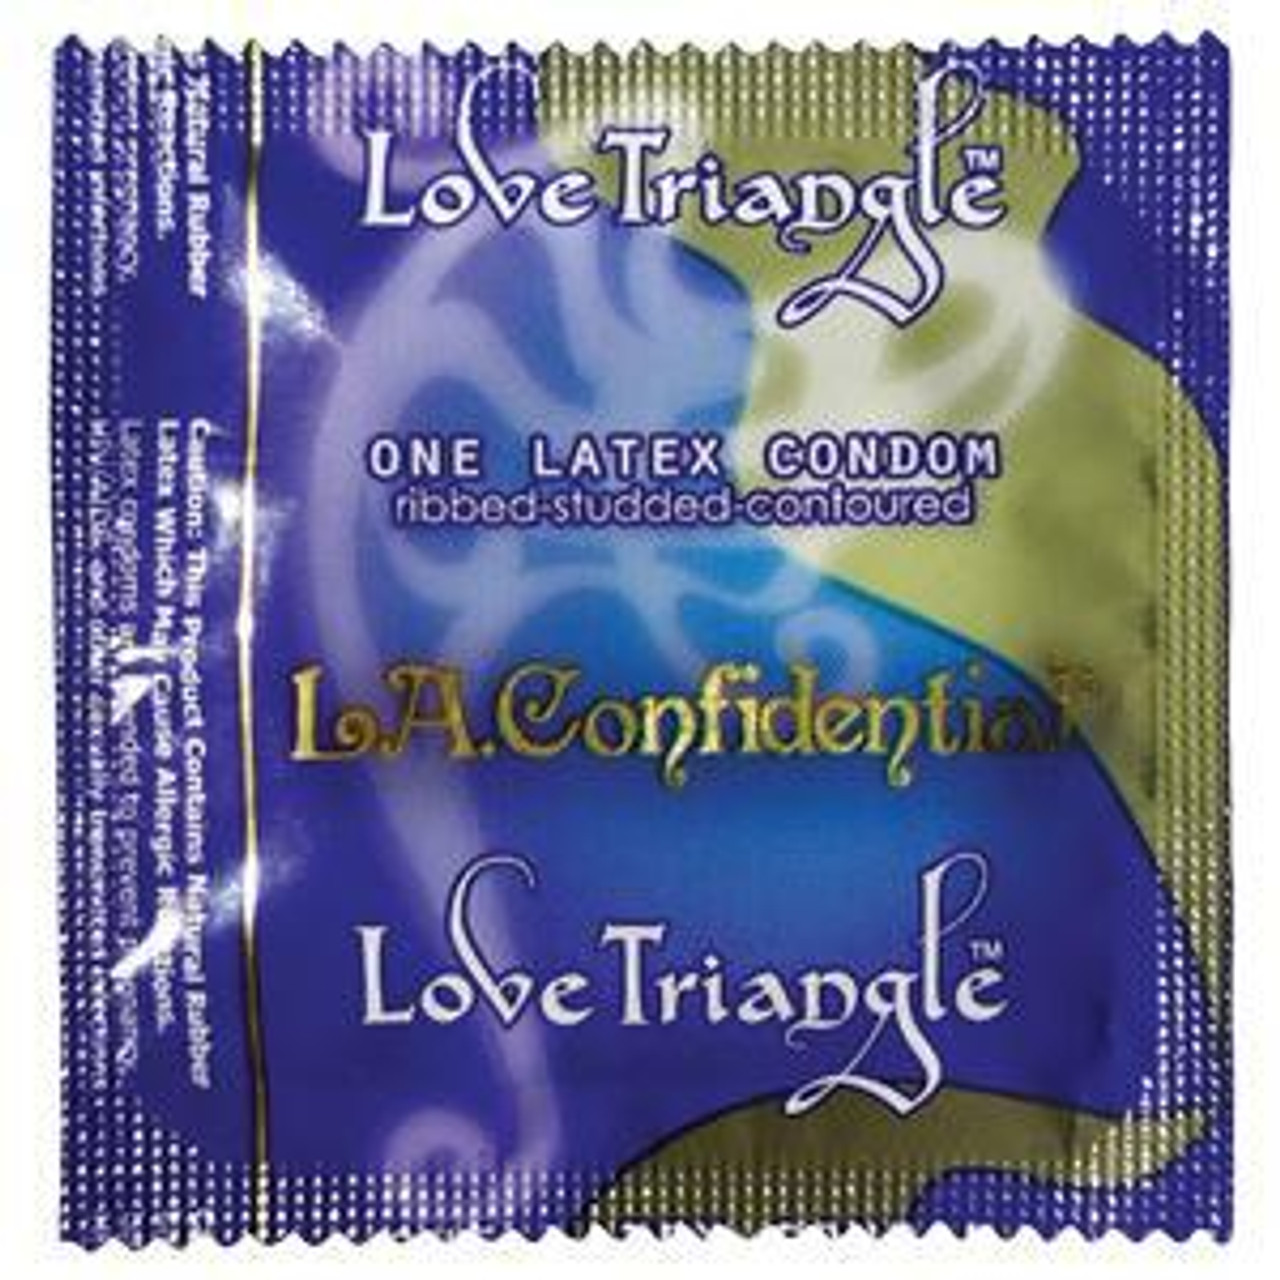 Buy Caution Wear LA Confidential Love Triangle Condoms Online | CondomsFast